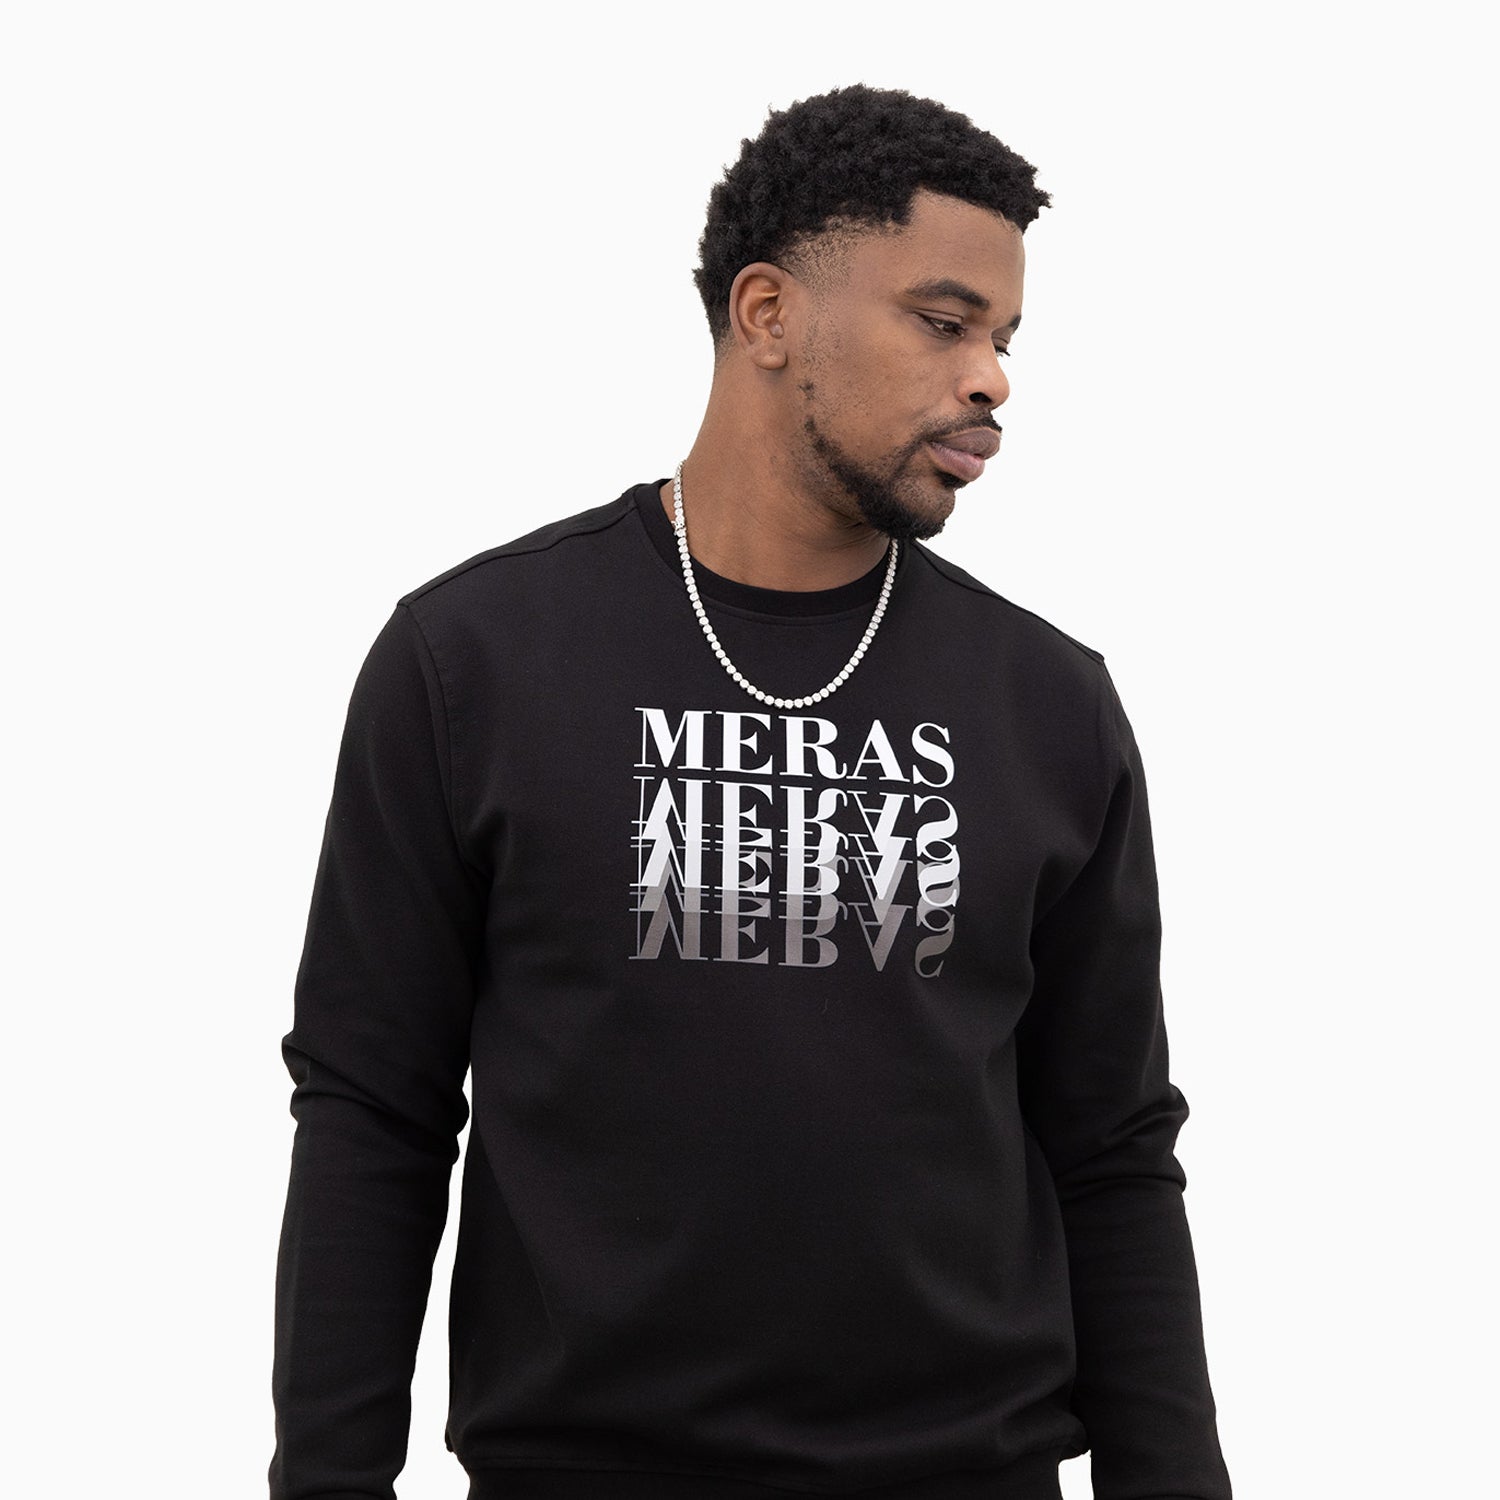 meras-mens-classic-logo-crew-neck-sweatshirt-mc2302-black